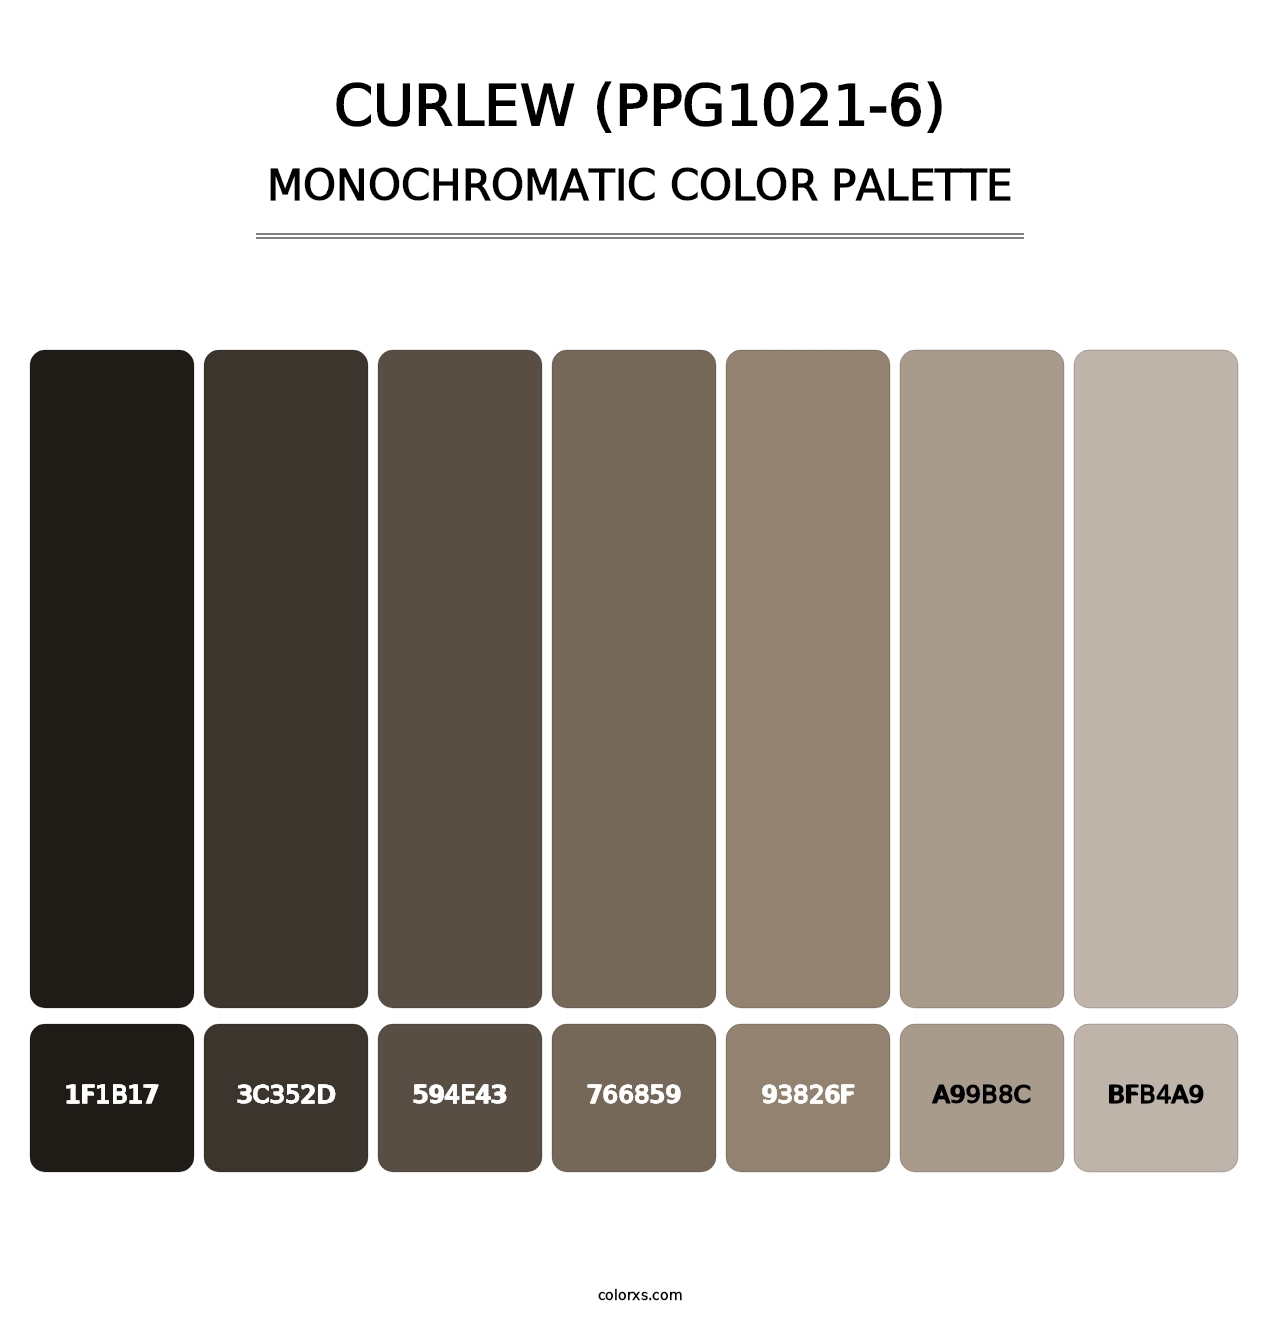 Curlew (PPG1021-6) - Monochromatic Color Palette